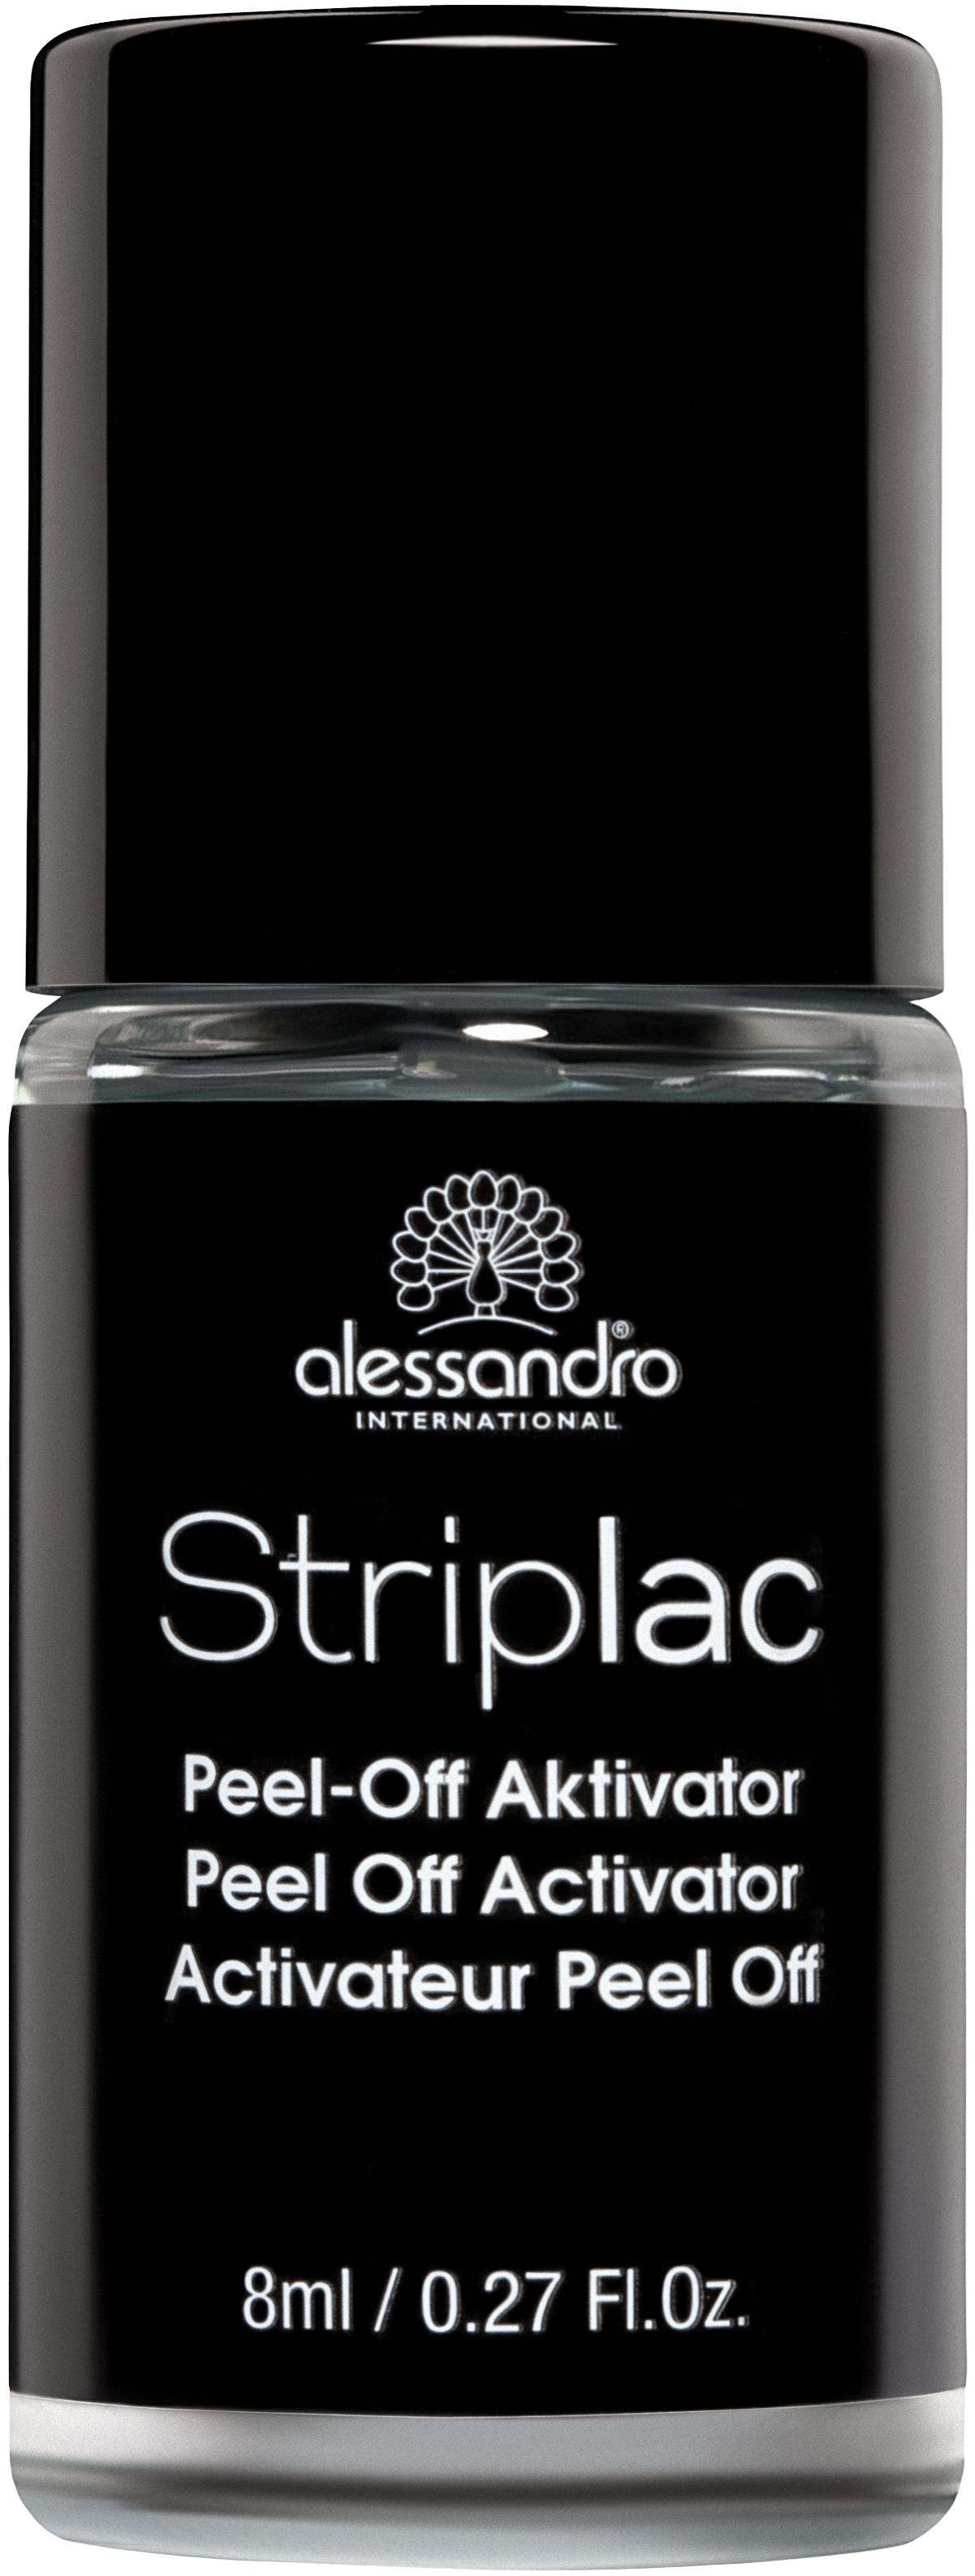 Alessandro Striplac Peel-Off Aktivator